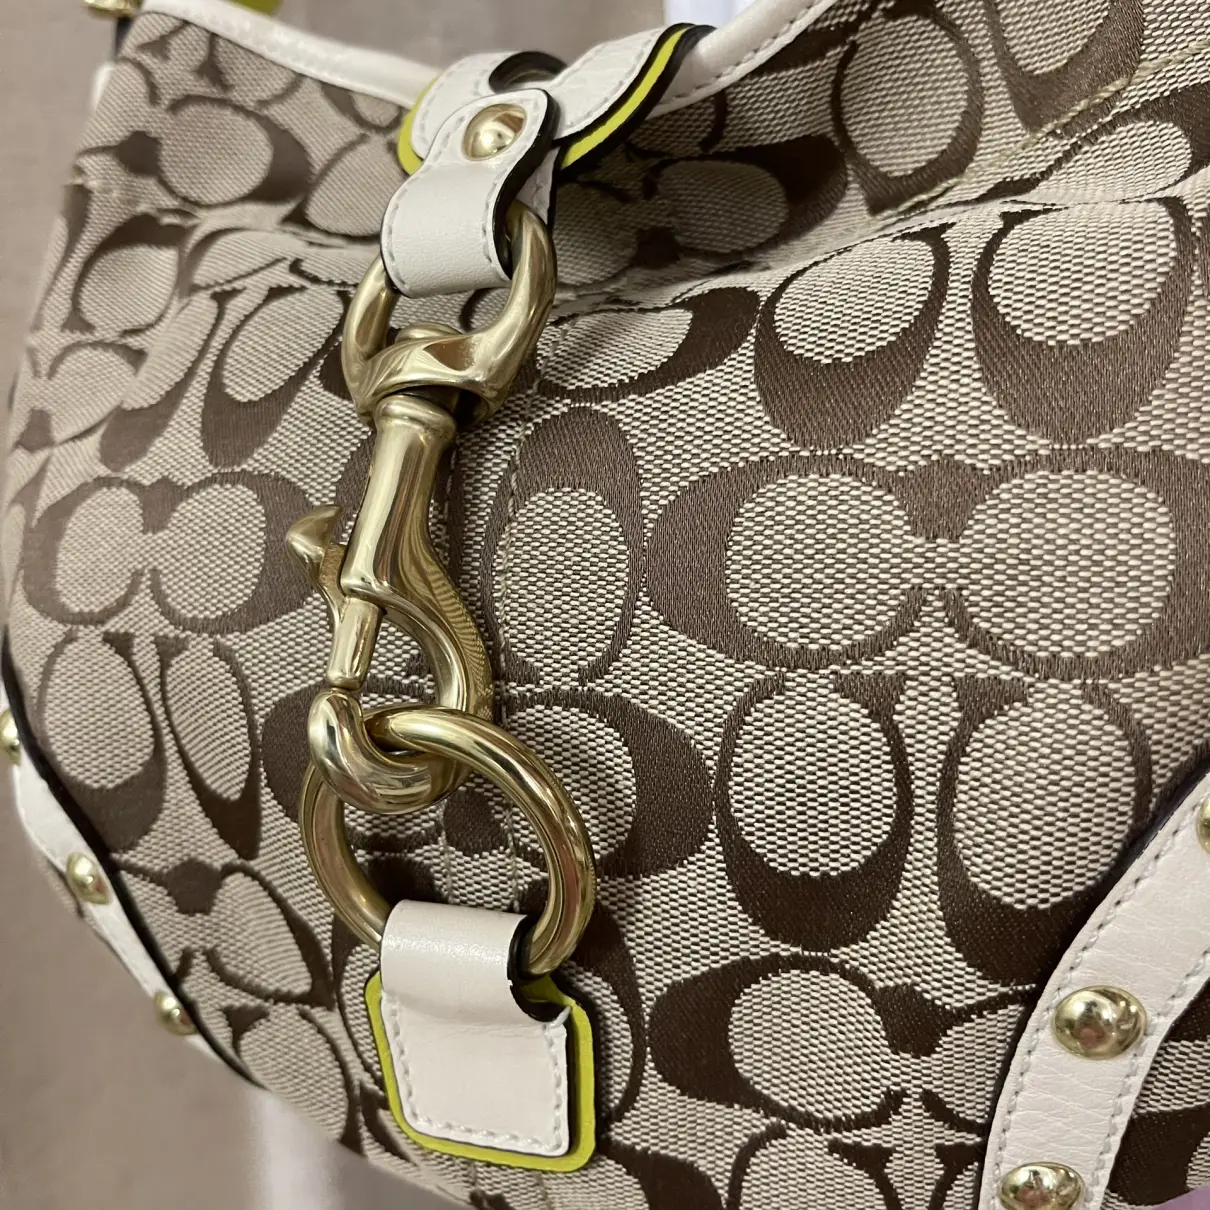 Hamilton Hobo cloth handbag Coach